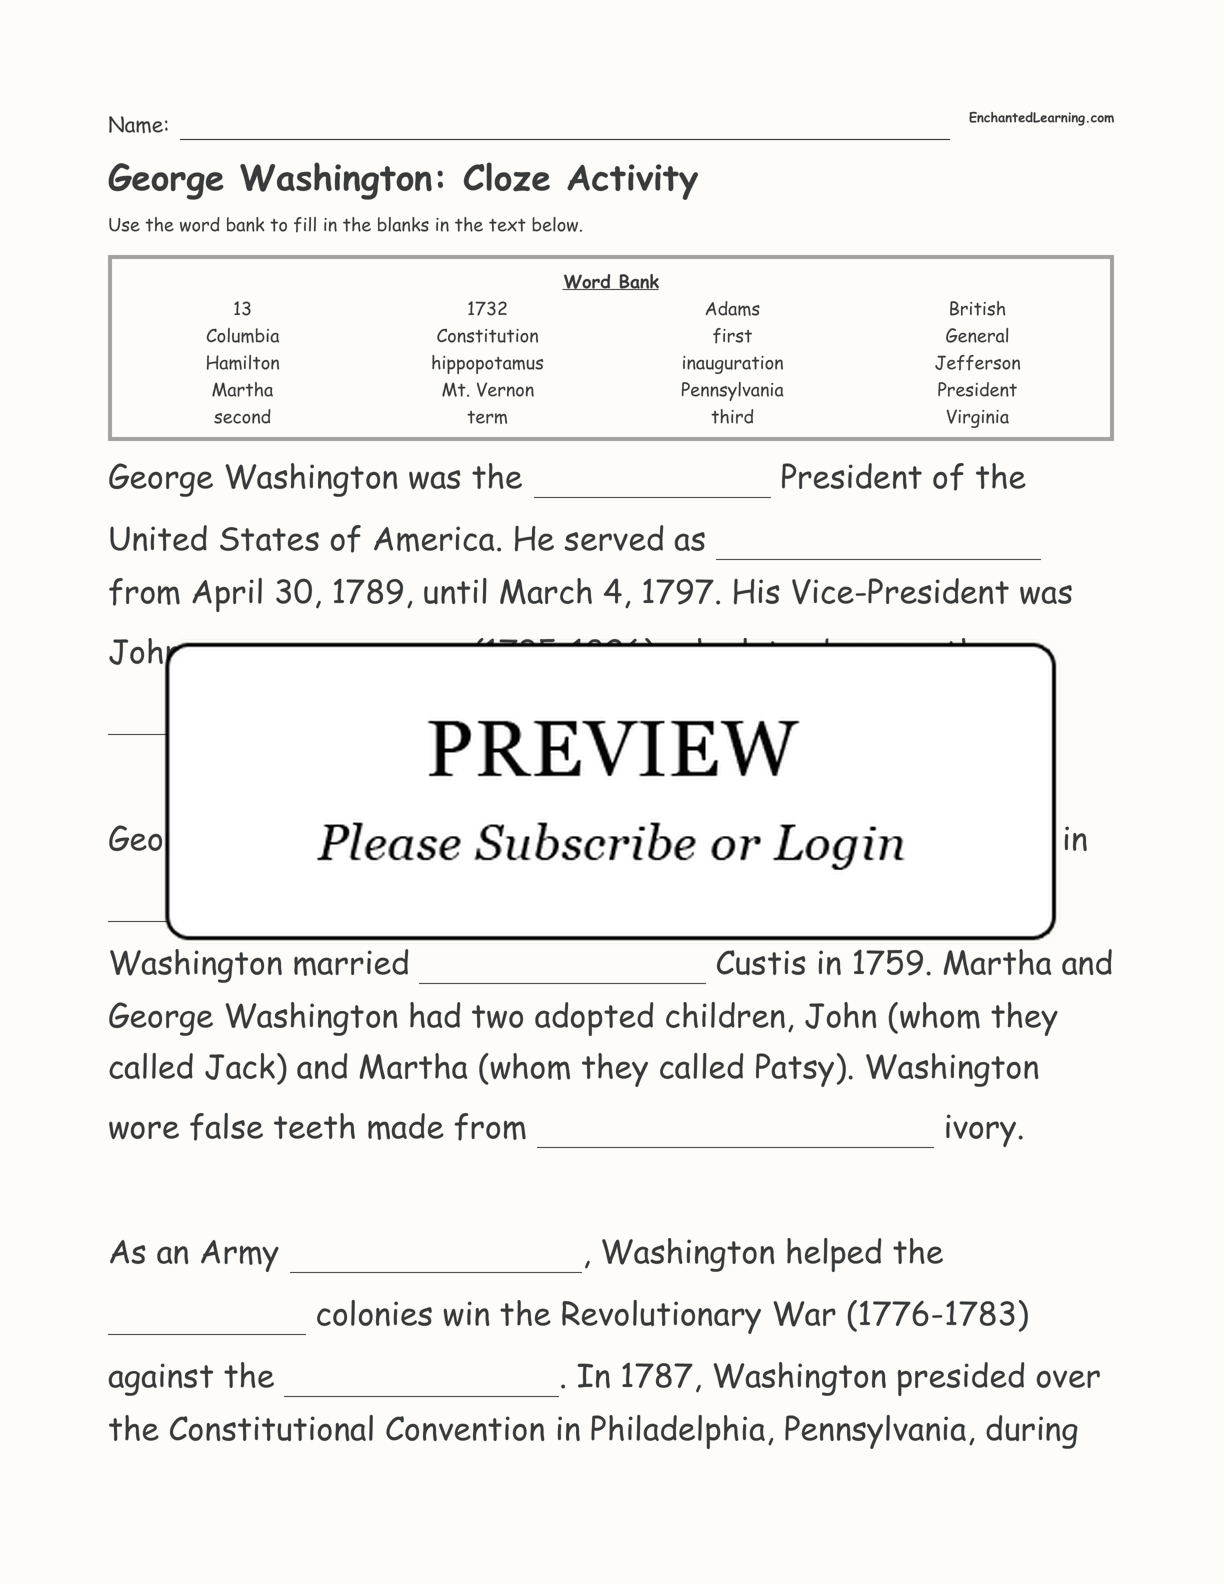 George Washington: Cloze Activity interactive worksheet page 1